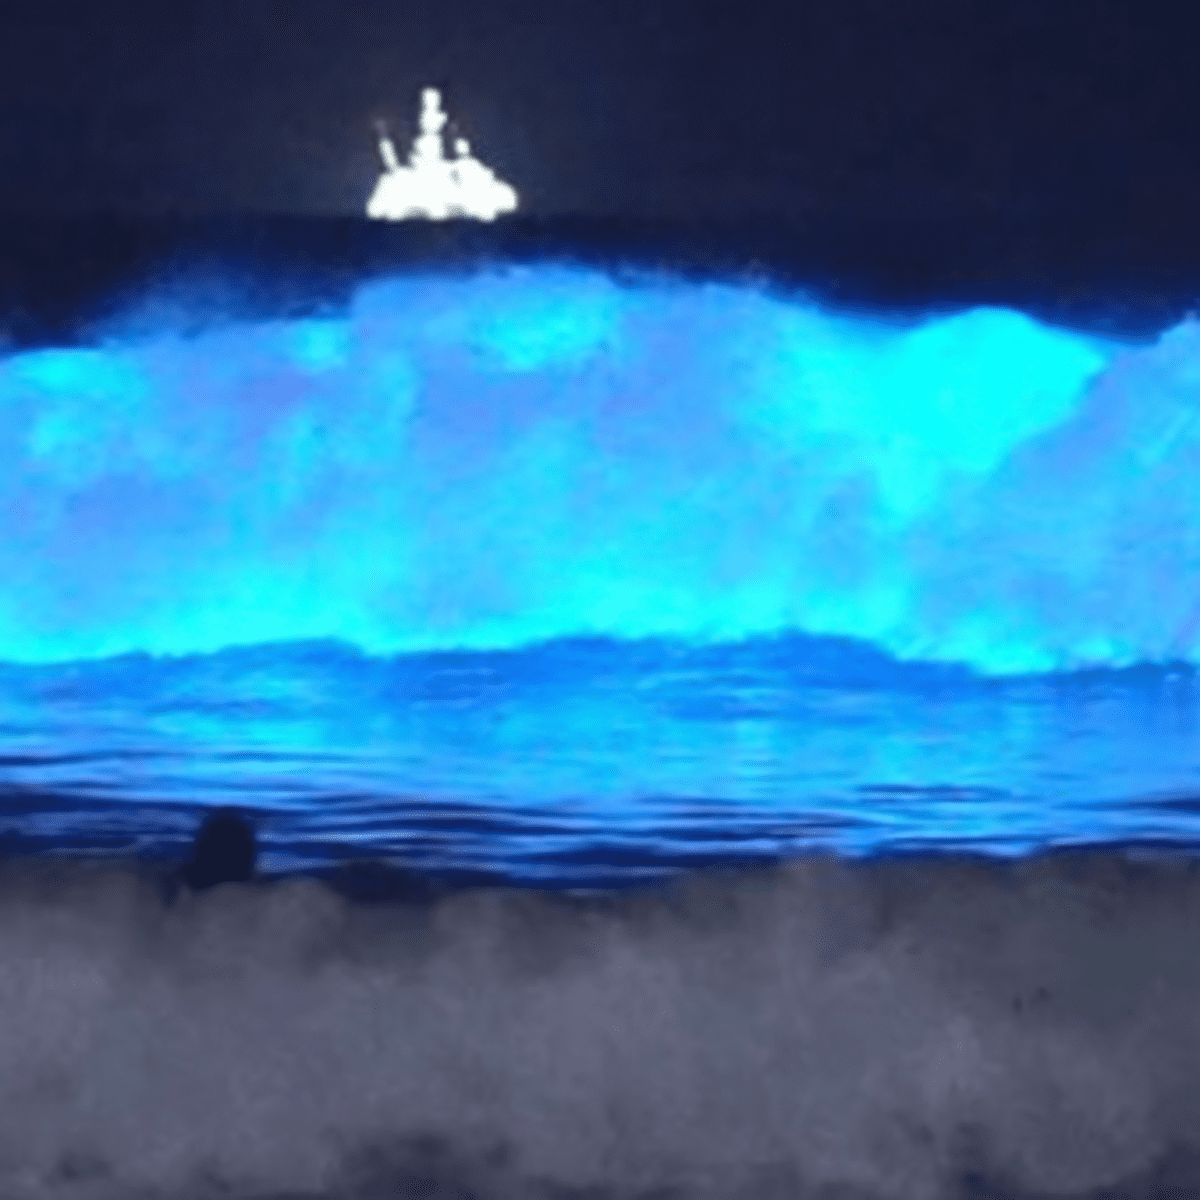 Bodyboarders rip through bioluminescent waves in California